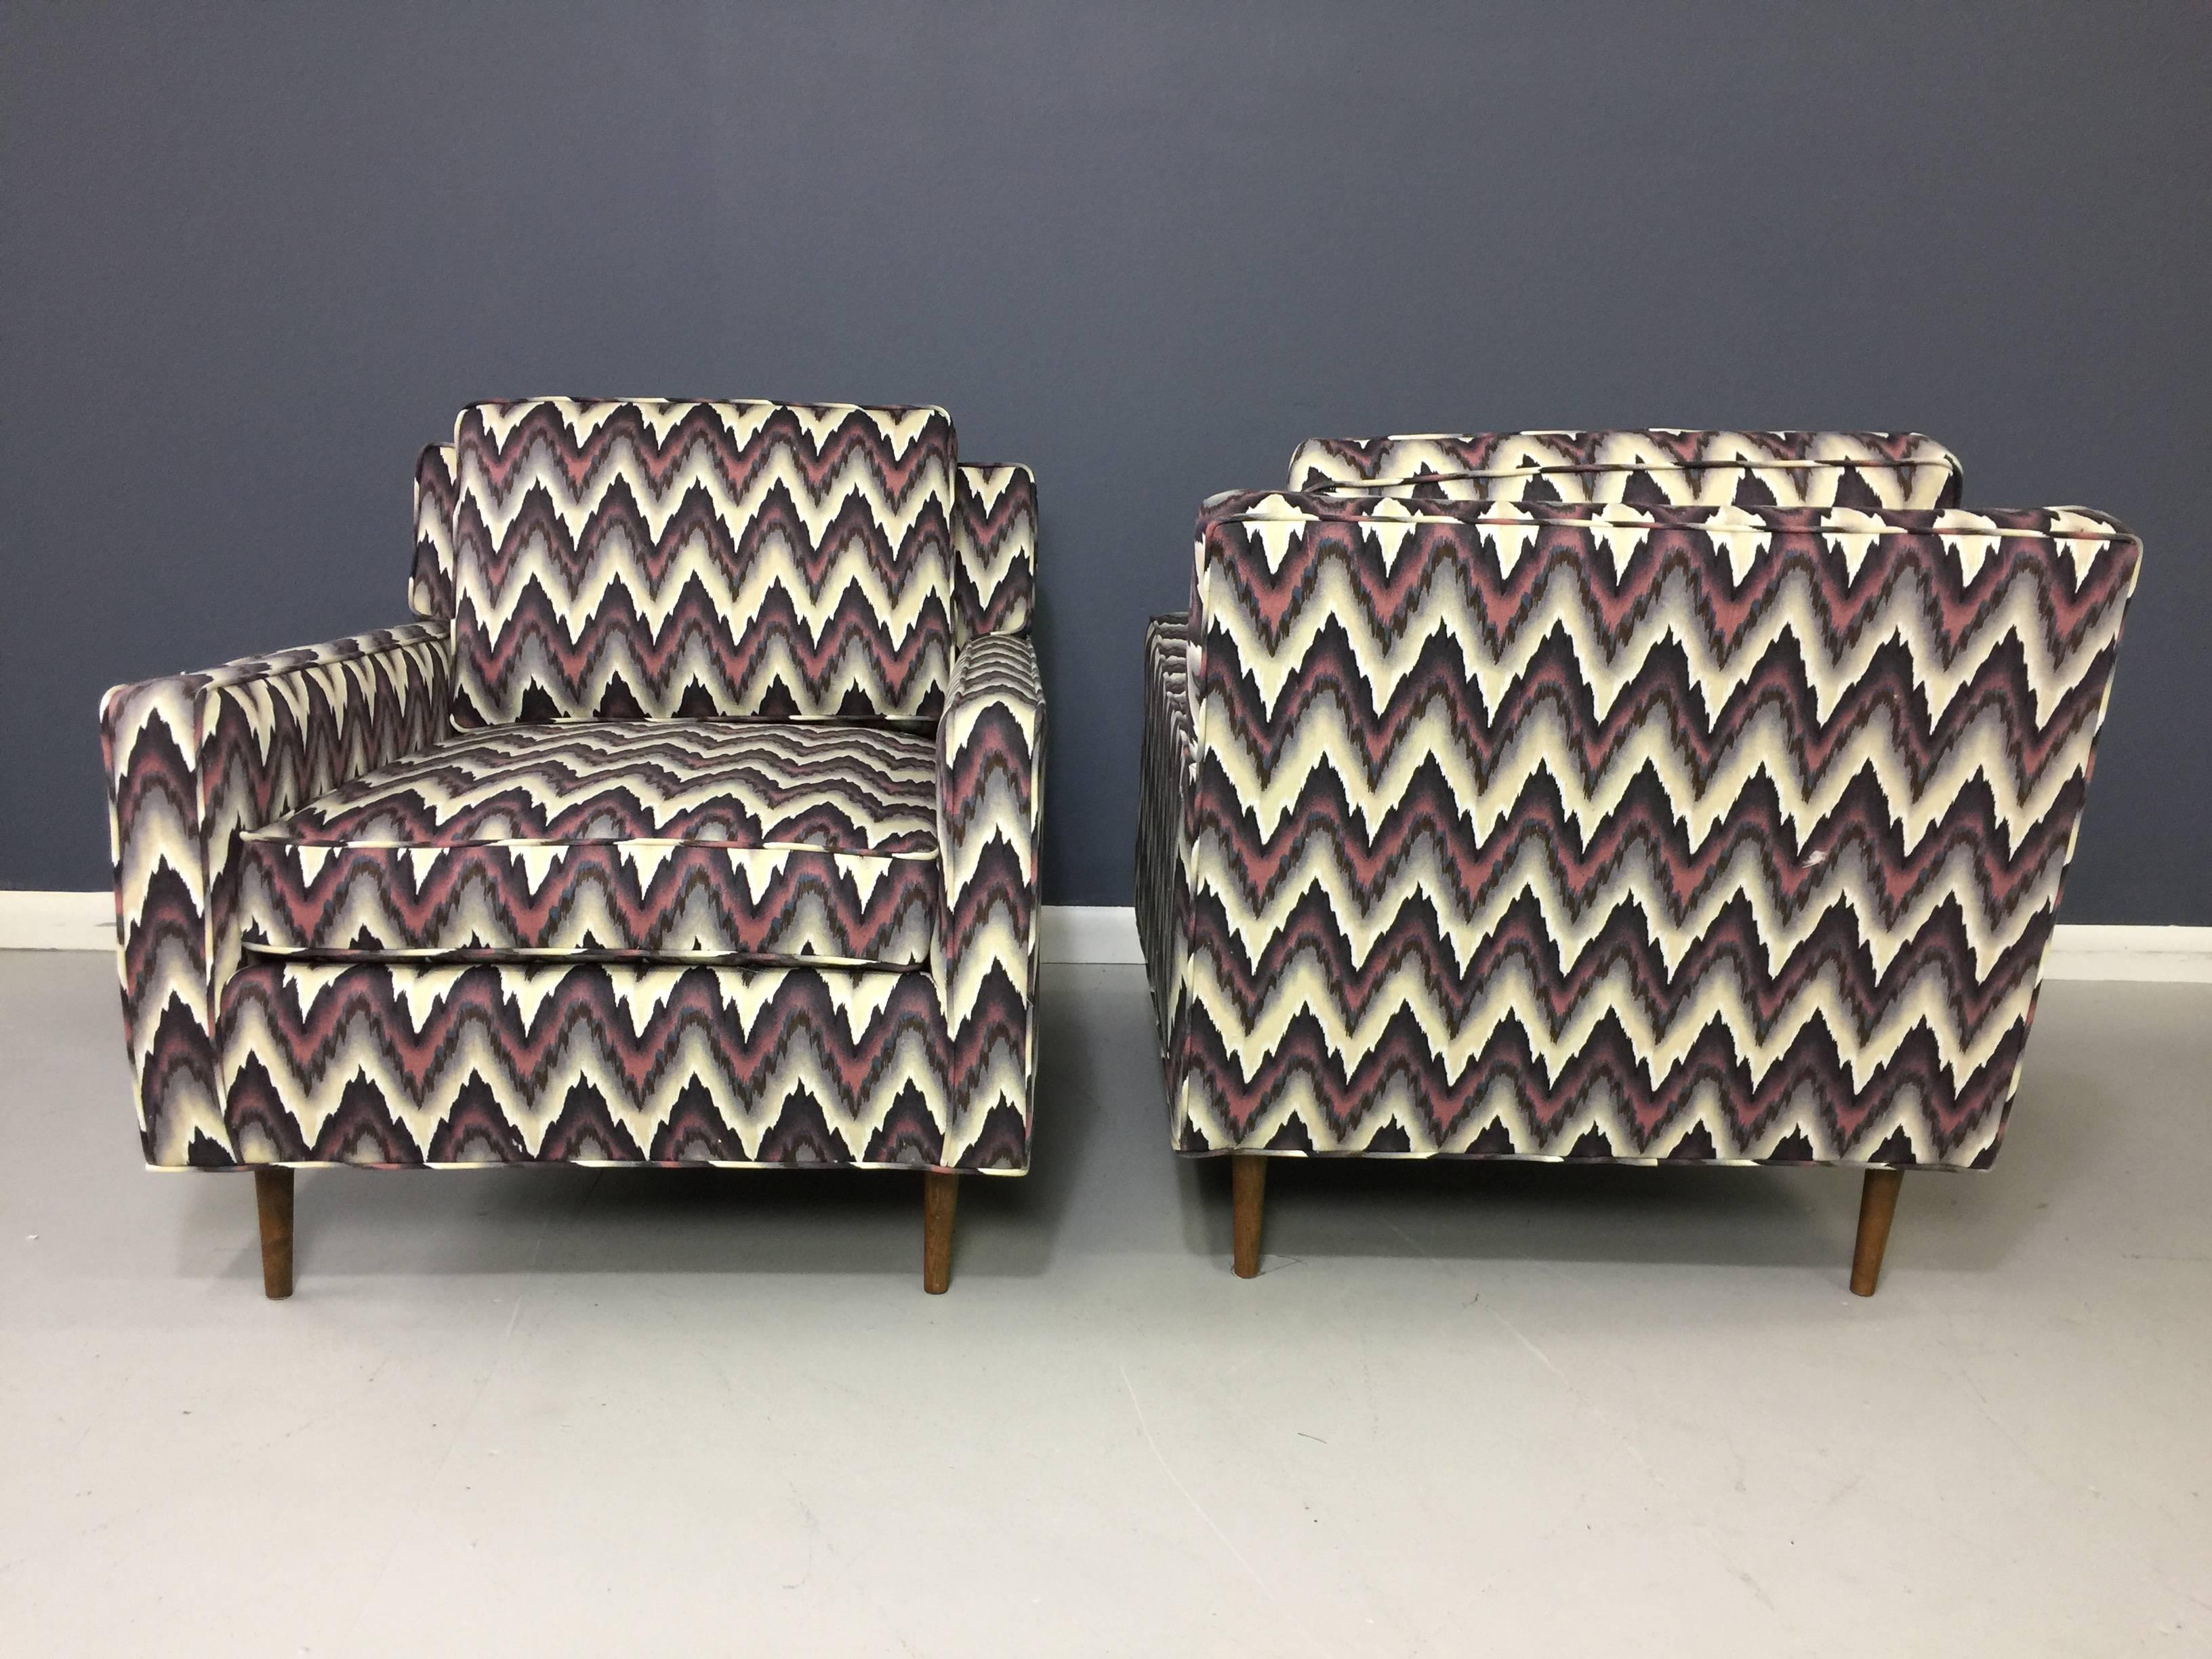 20th Century Pair of Mid-Century Modern Flame Stitch Chevron Cube Chairs